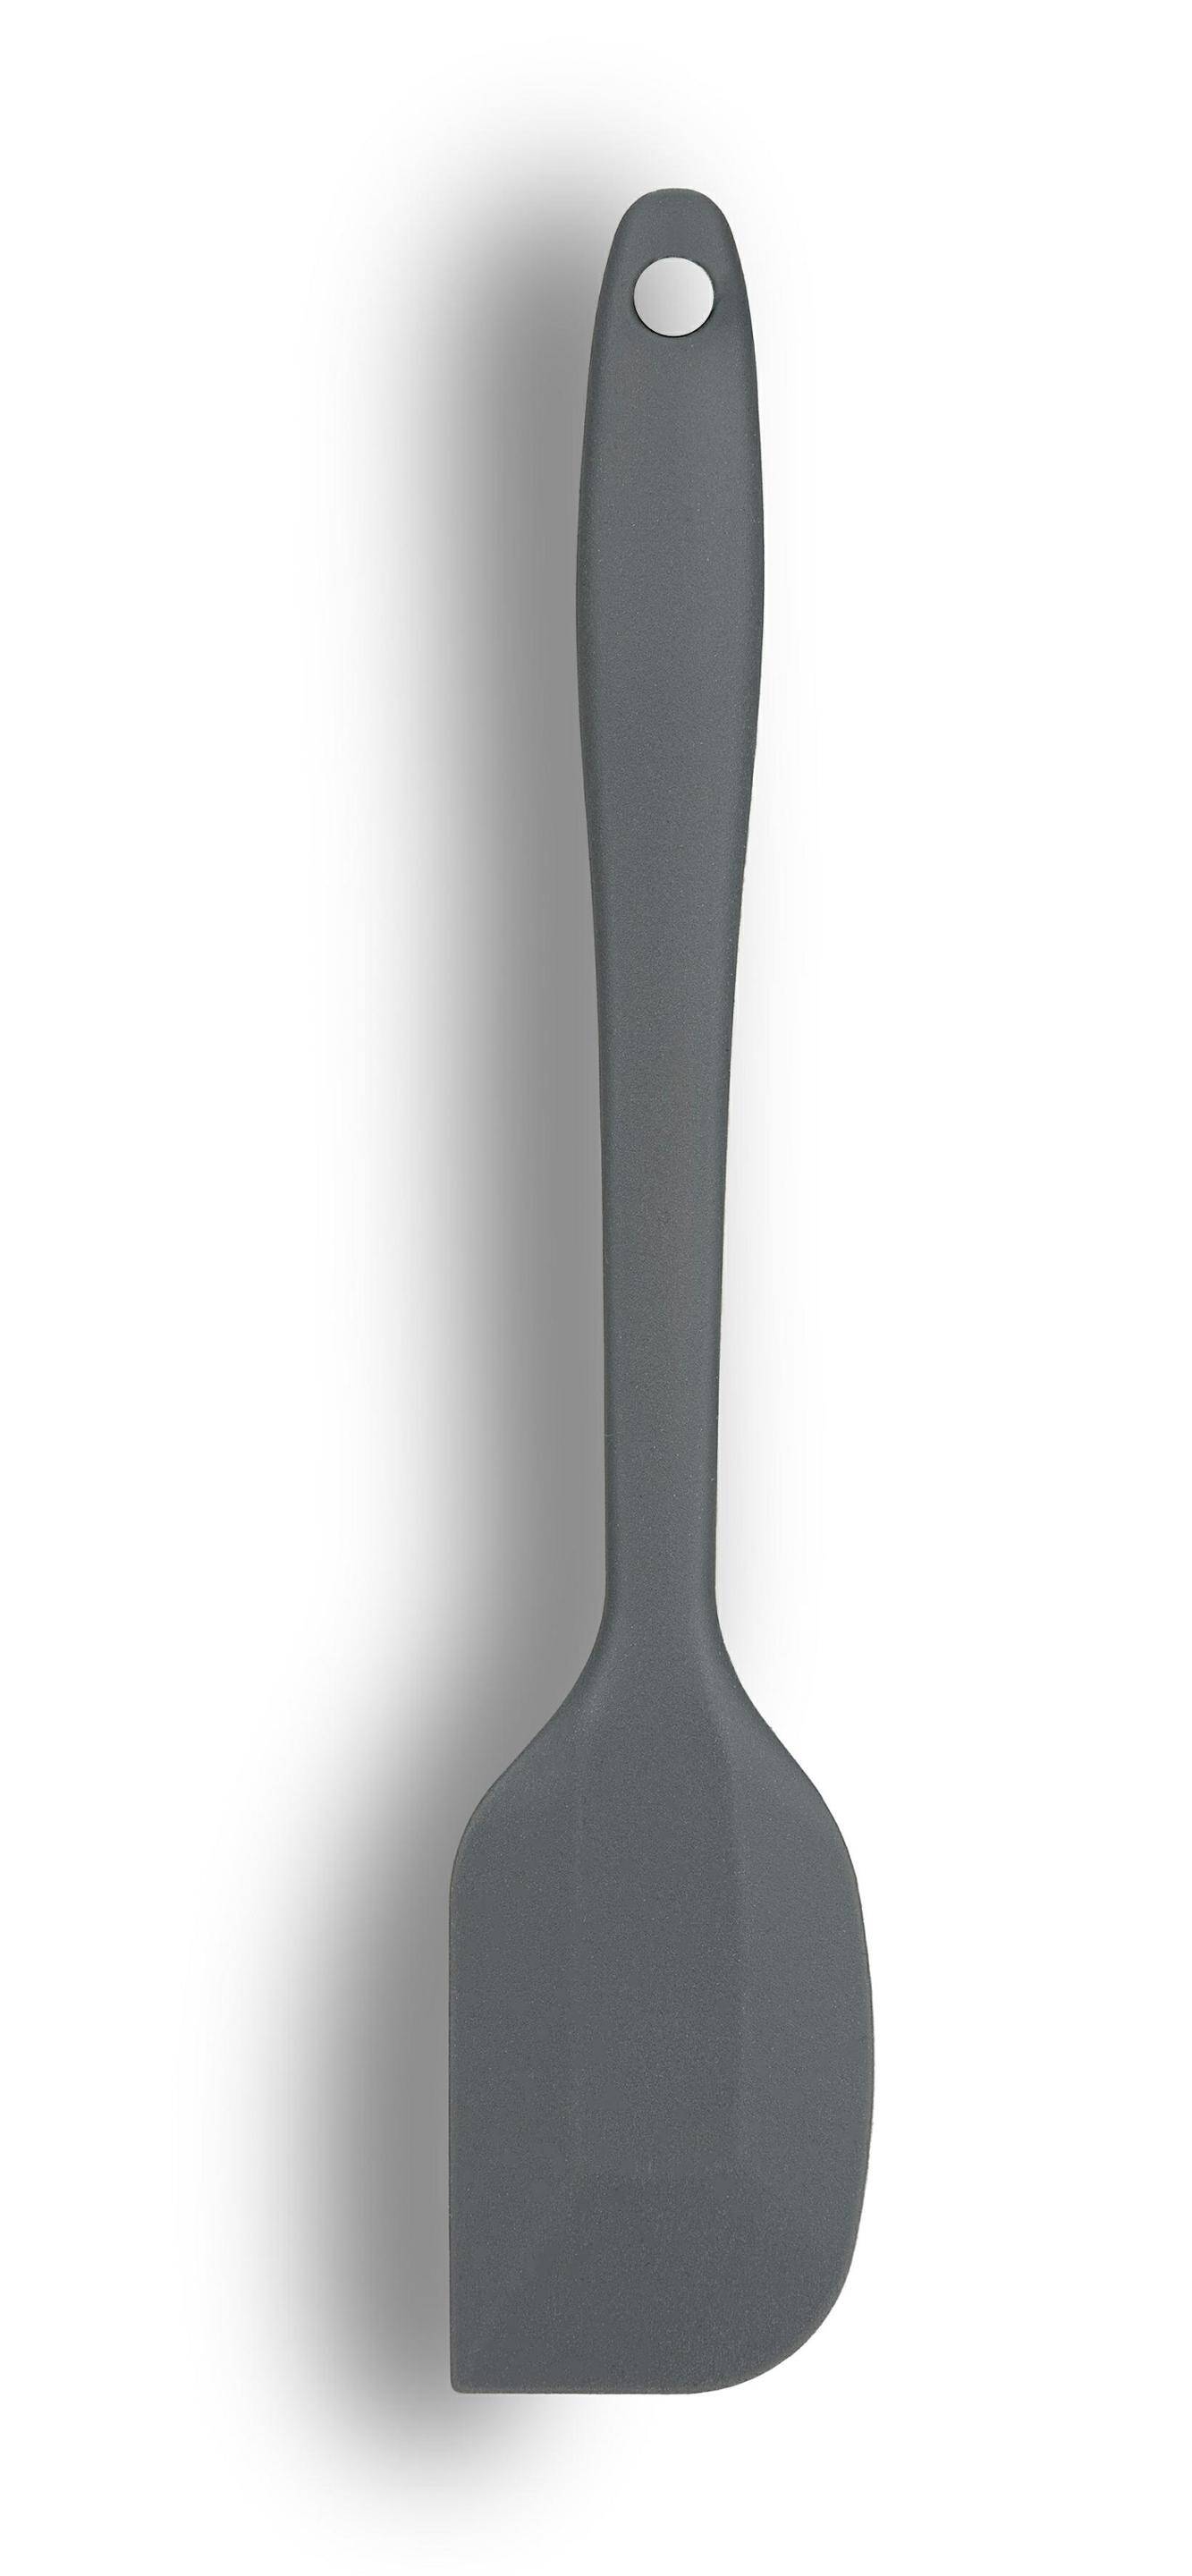 spatula for lick mat (Photo 4)